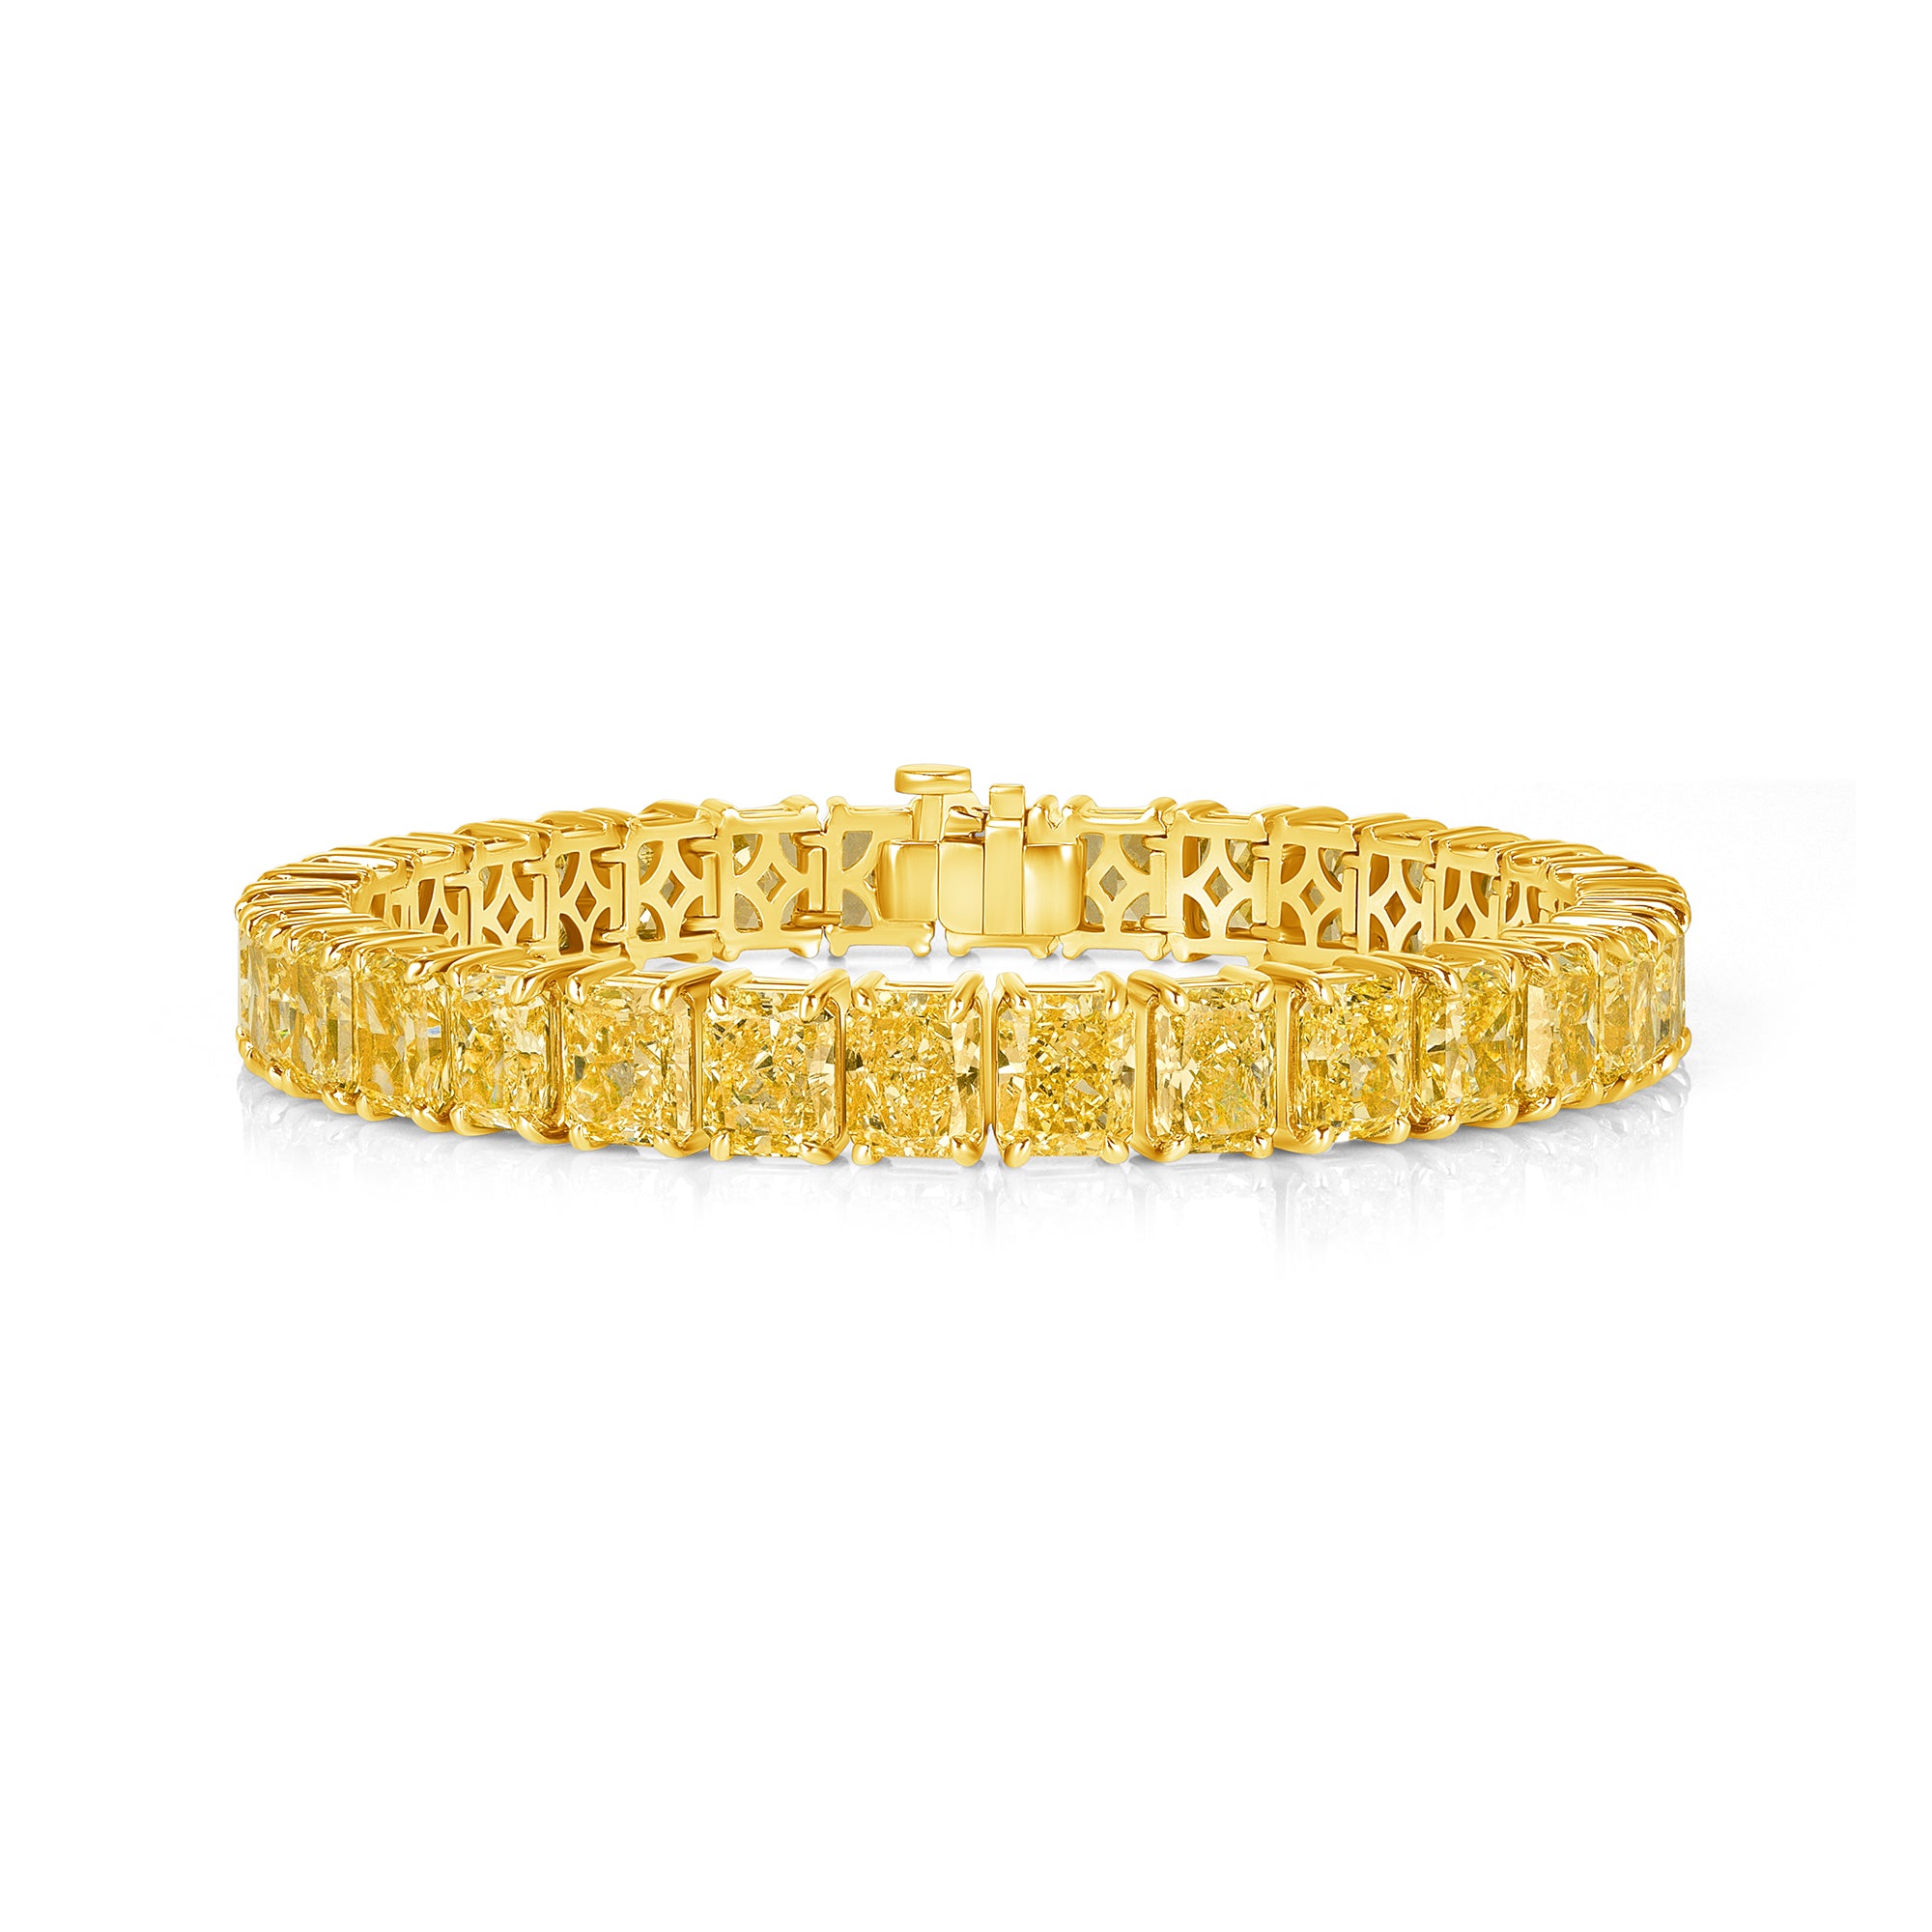 Radiant Cut Fancy Yellow Diamond Tennis Bracelet in 18 Karat Yellow Gold